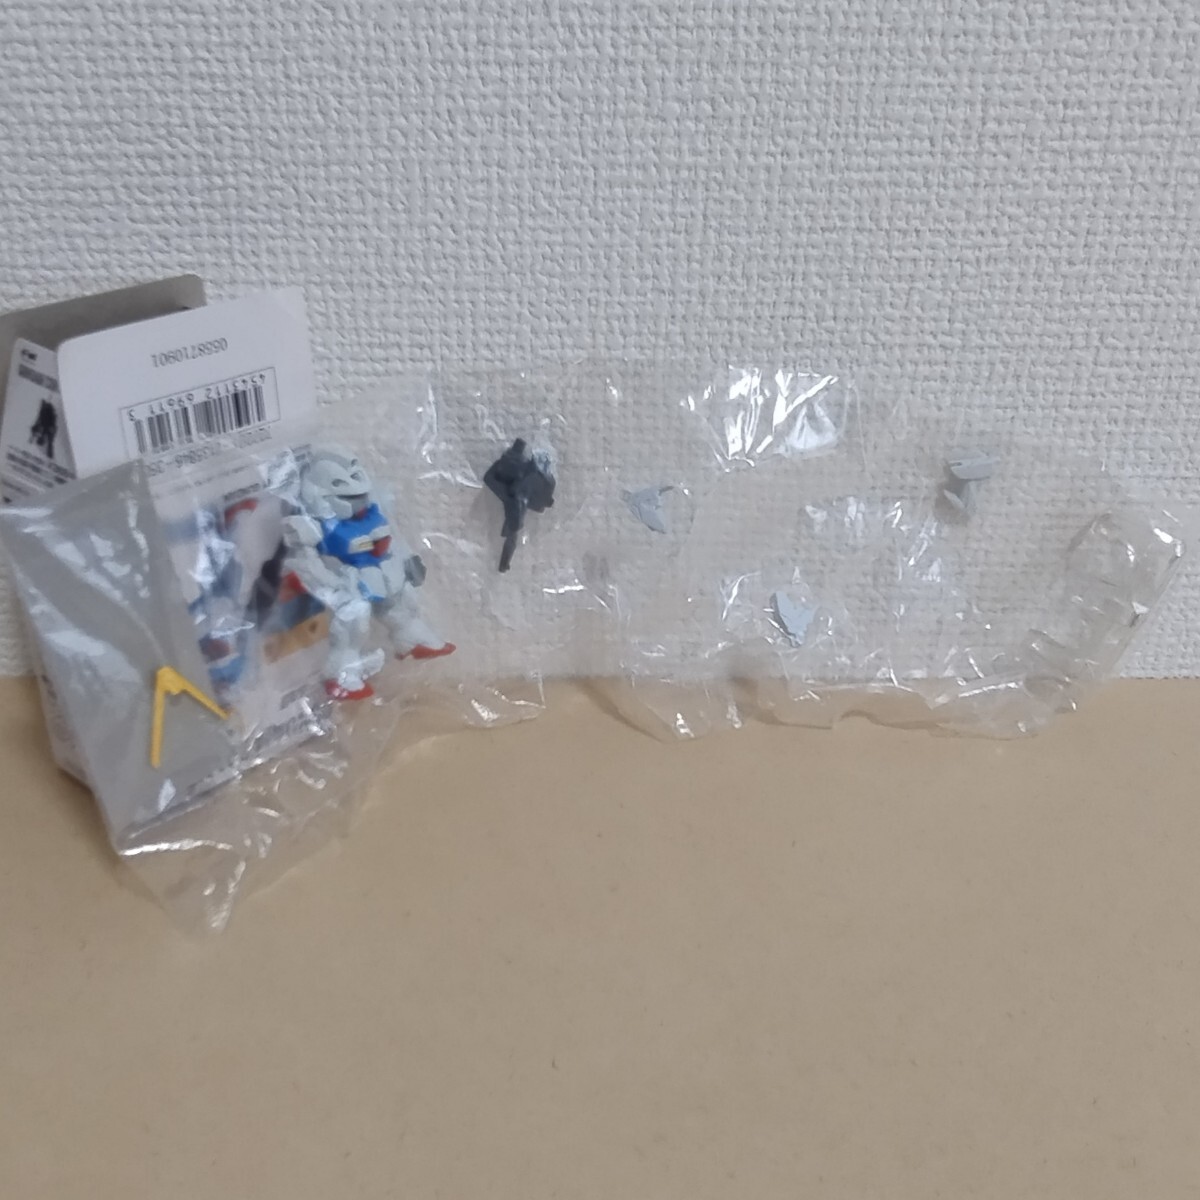 [ пакет нераспечатанный ] Gundam темно синий балка ji4 23 V Gundam FW GUNDAM CONVERGE